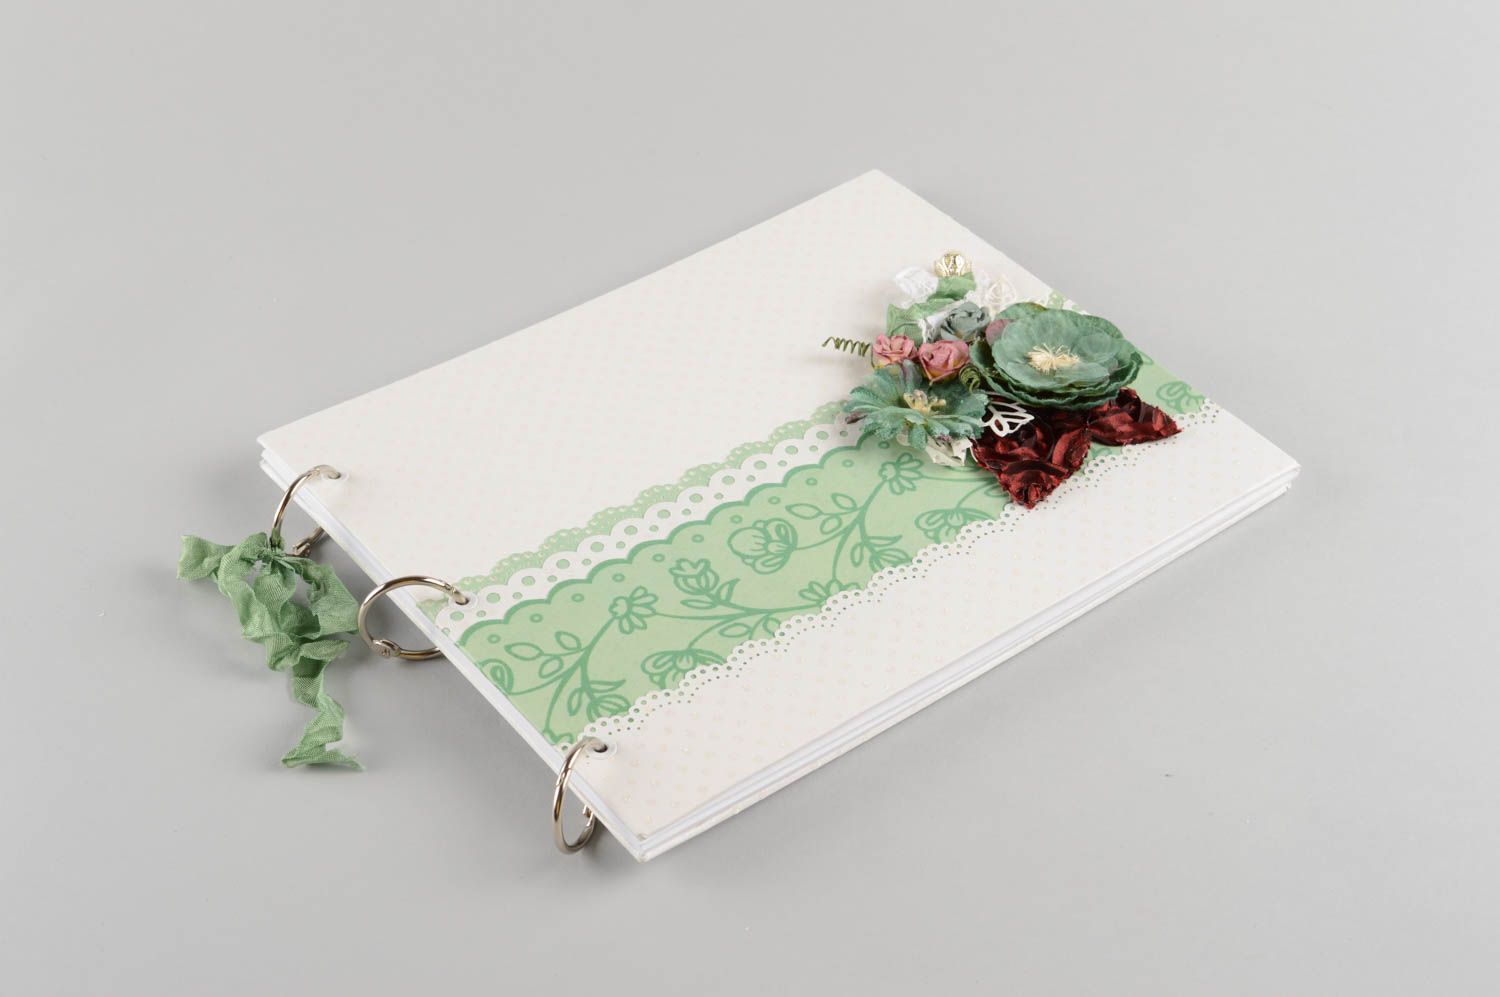 Designer unusual handmade books for wishes made using scrapbooking technique photo 2